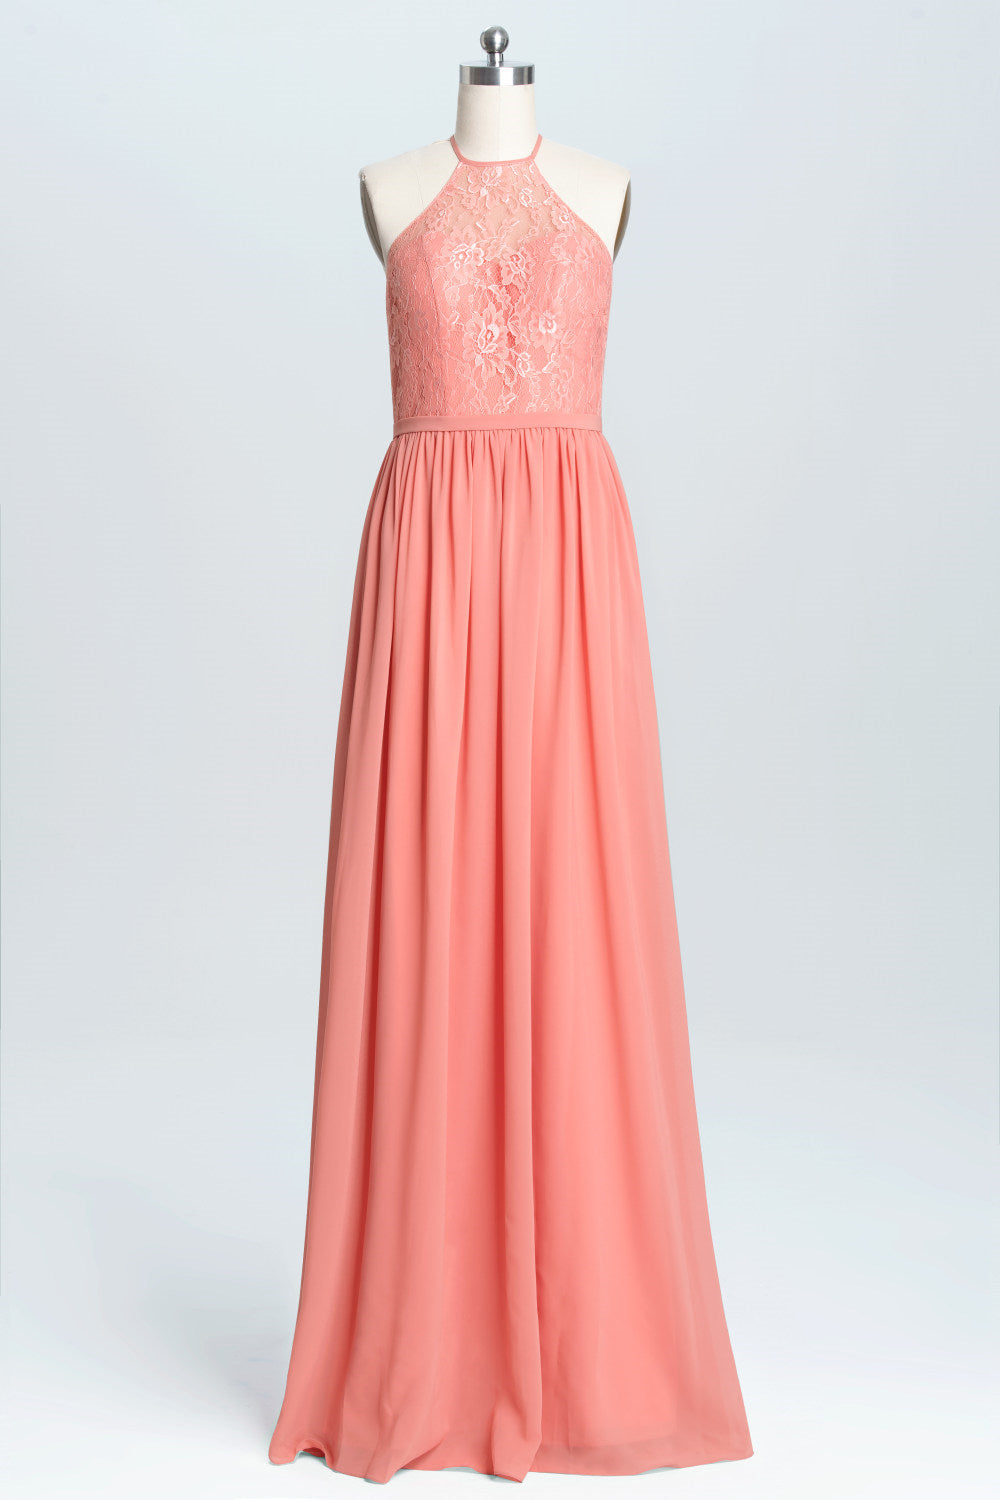 Halter Coral A-line Lace and Chiffon Long Bridesmaid Dress